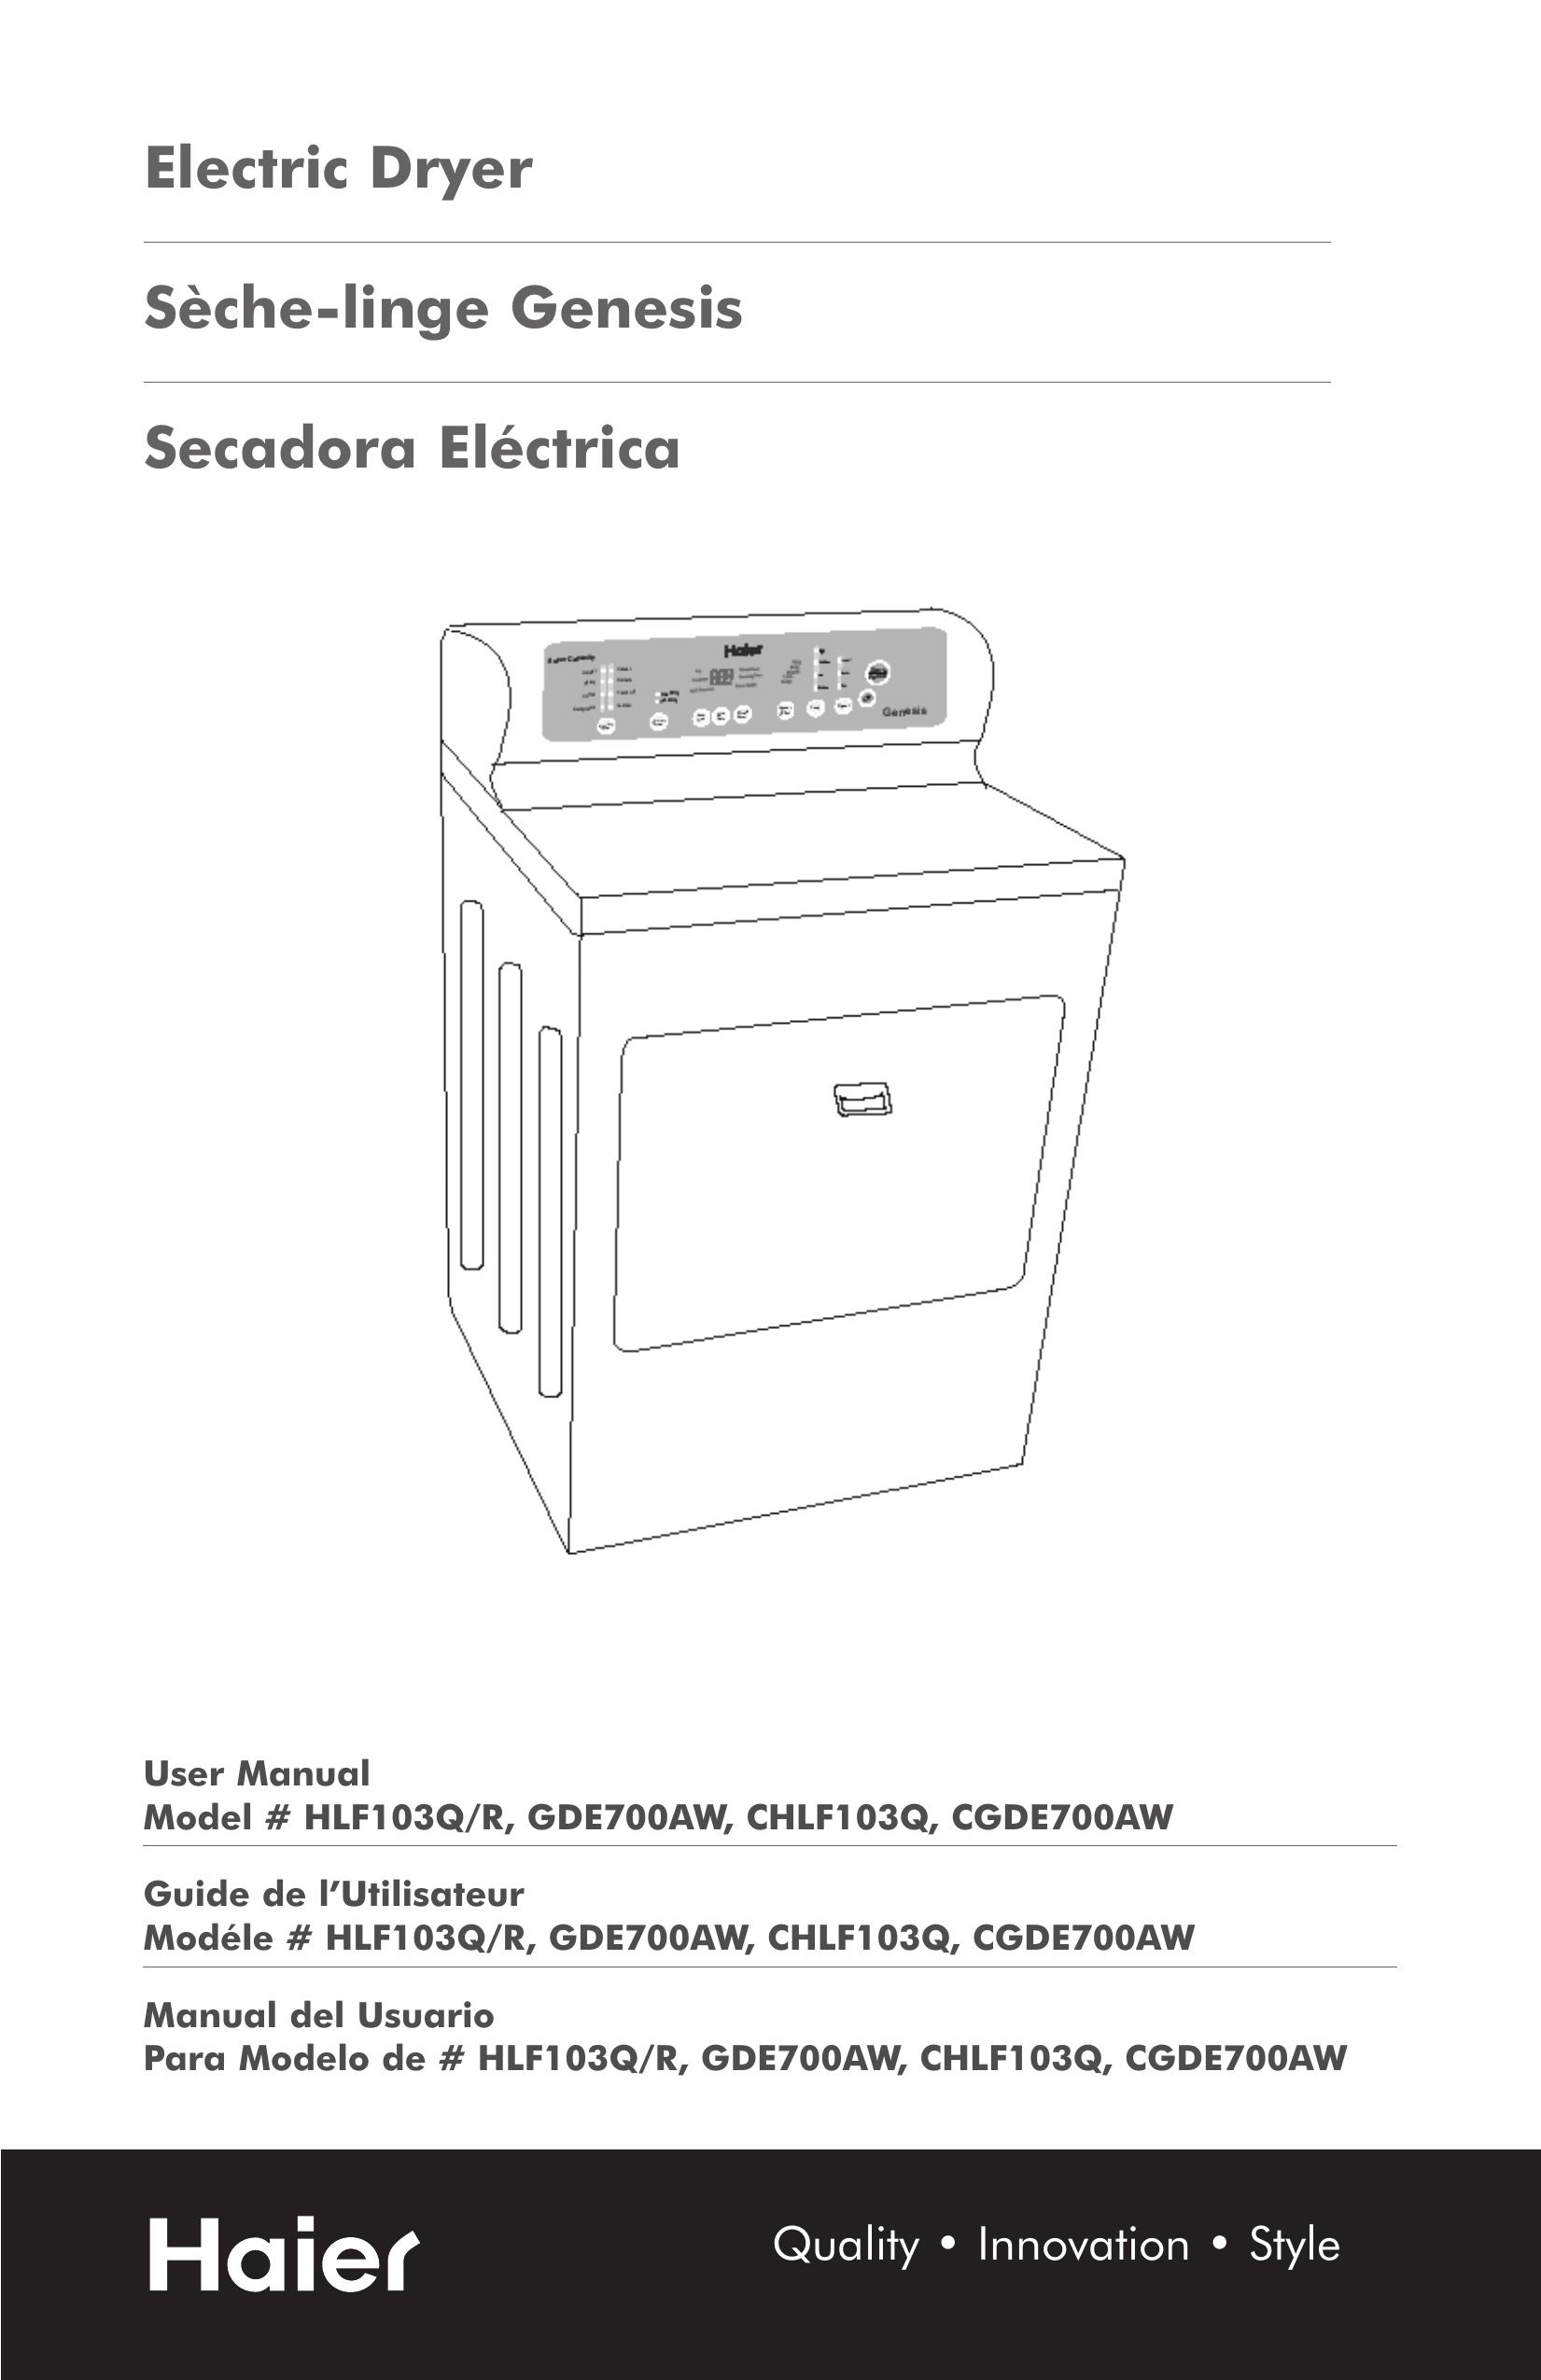 Haier HLF103Q/R Clothes Dryer User Manual